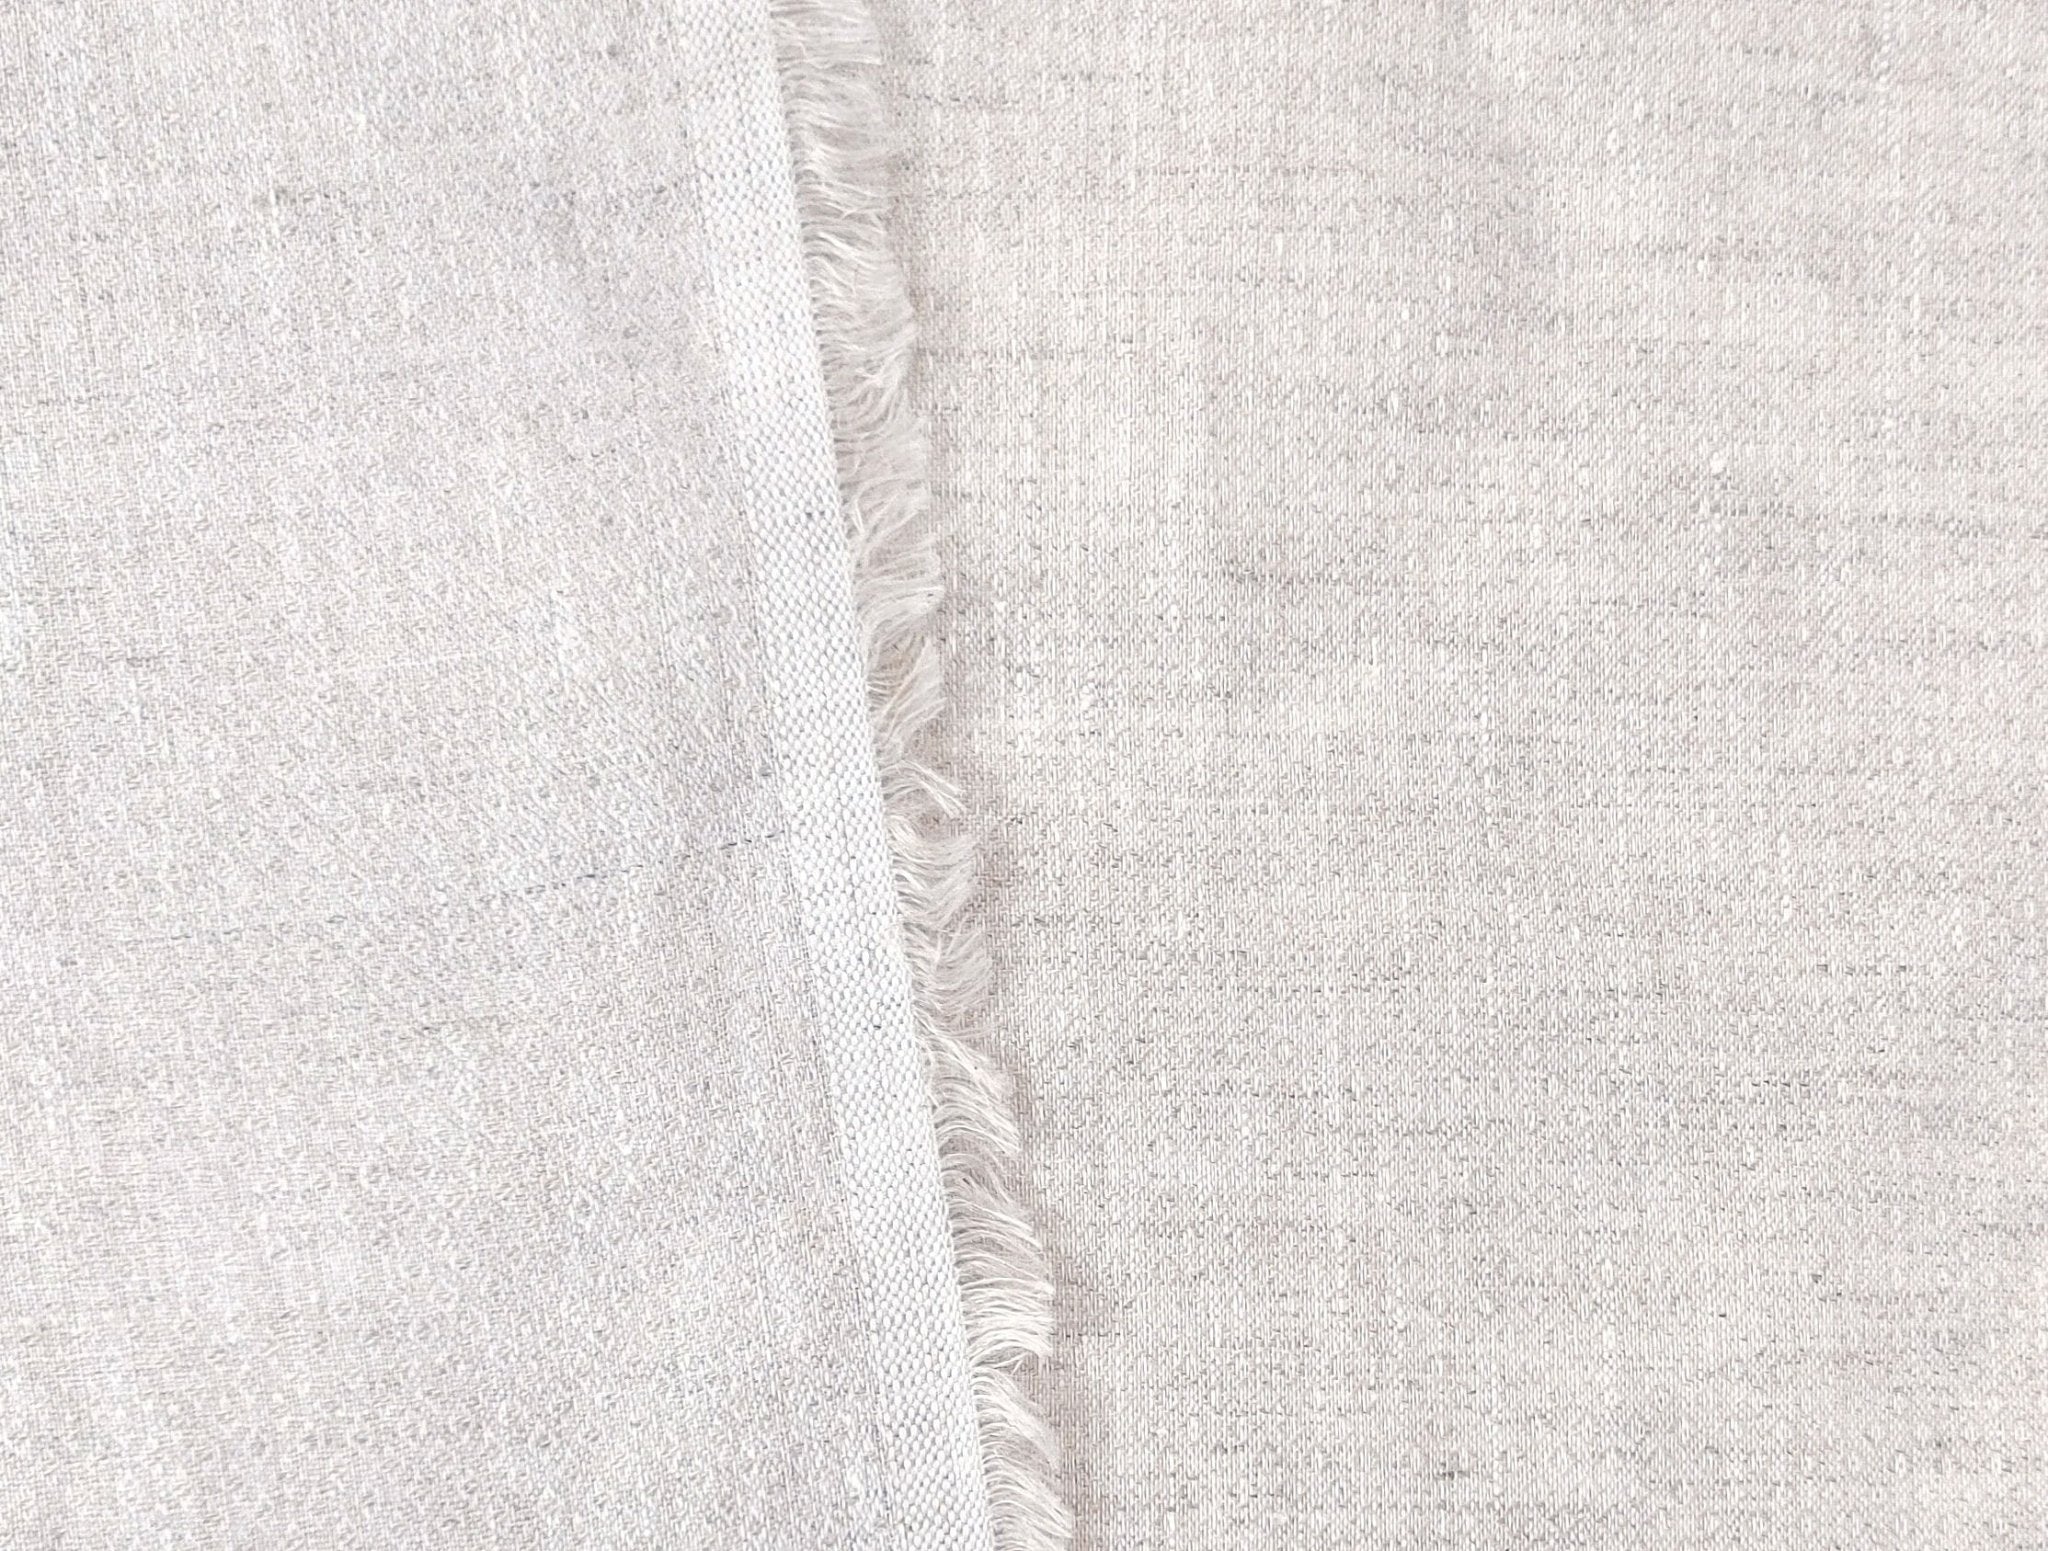 100% Linen Small Rhombus Jacquard Fabric in Light Natural Hue 4338 - The Linen Lab - Natural(Light)